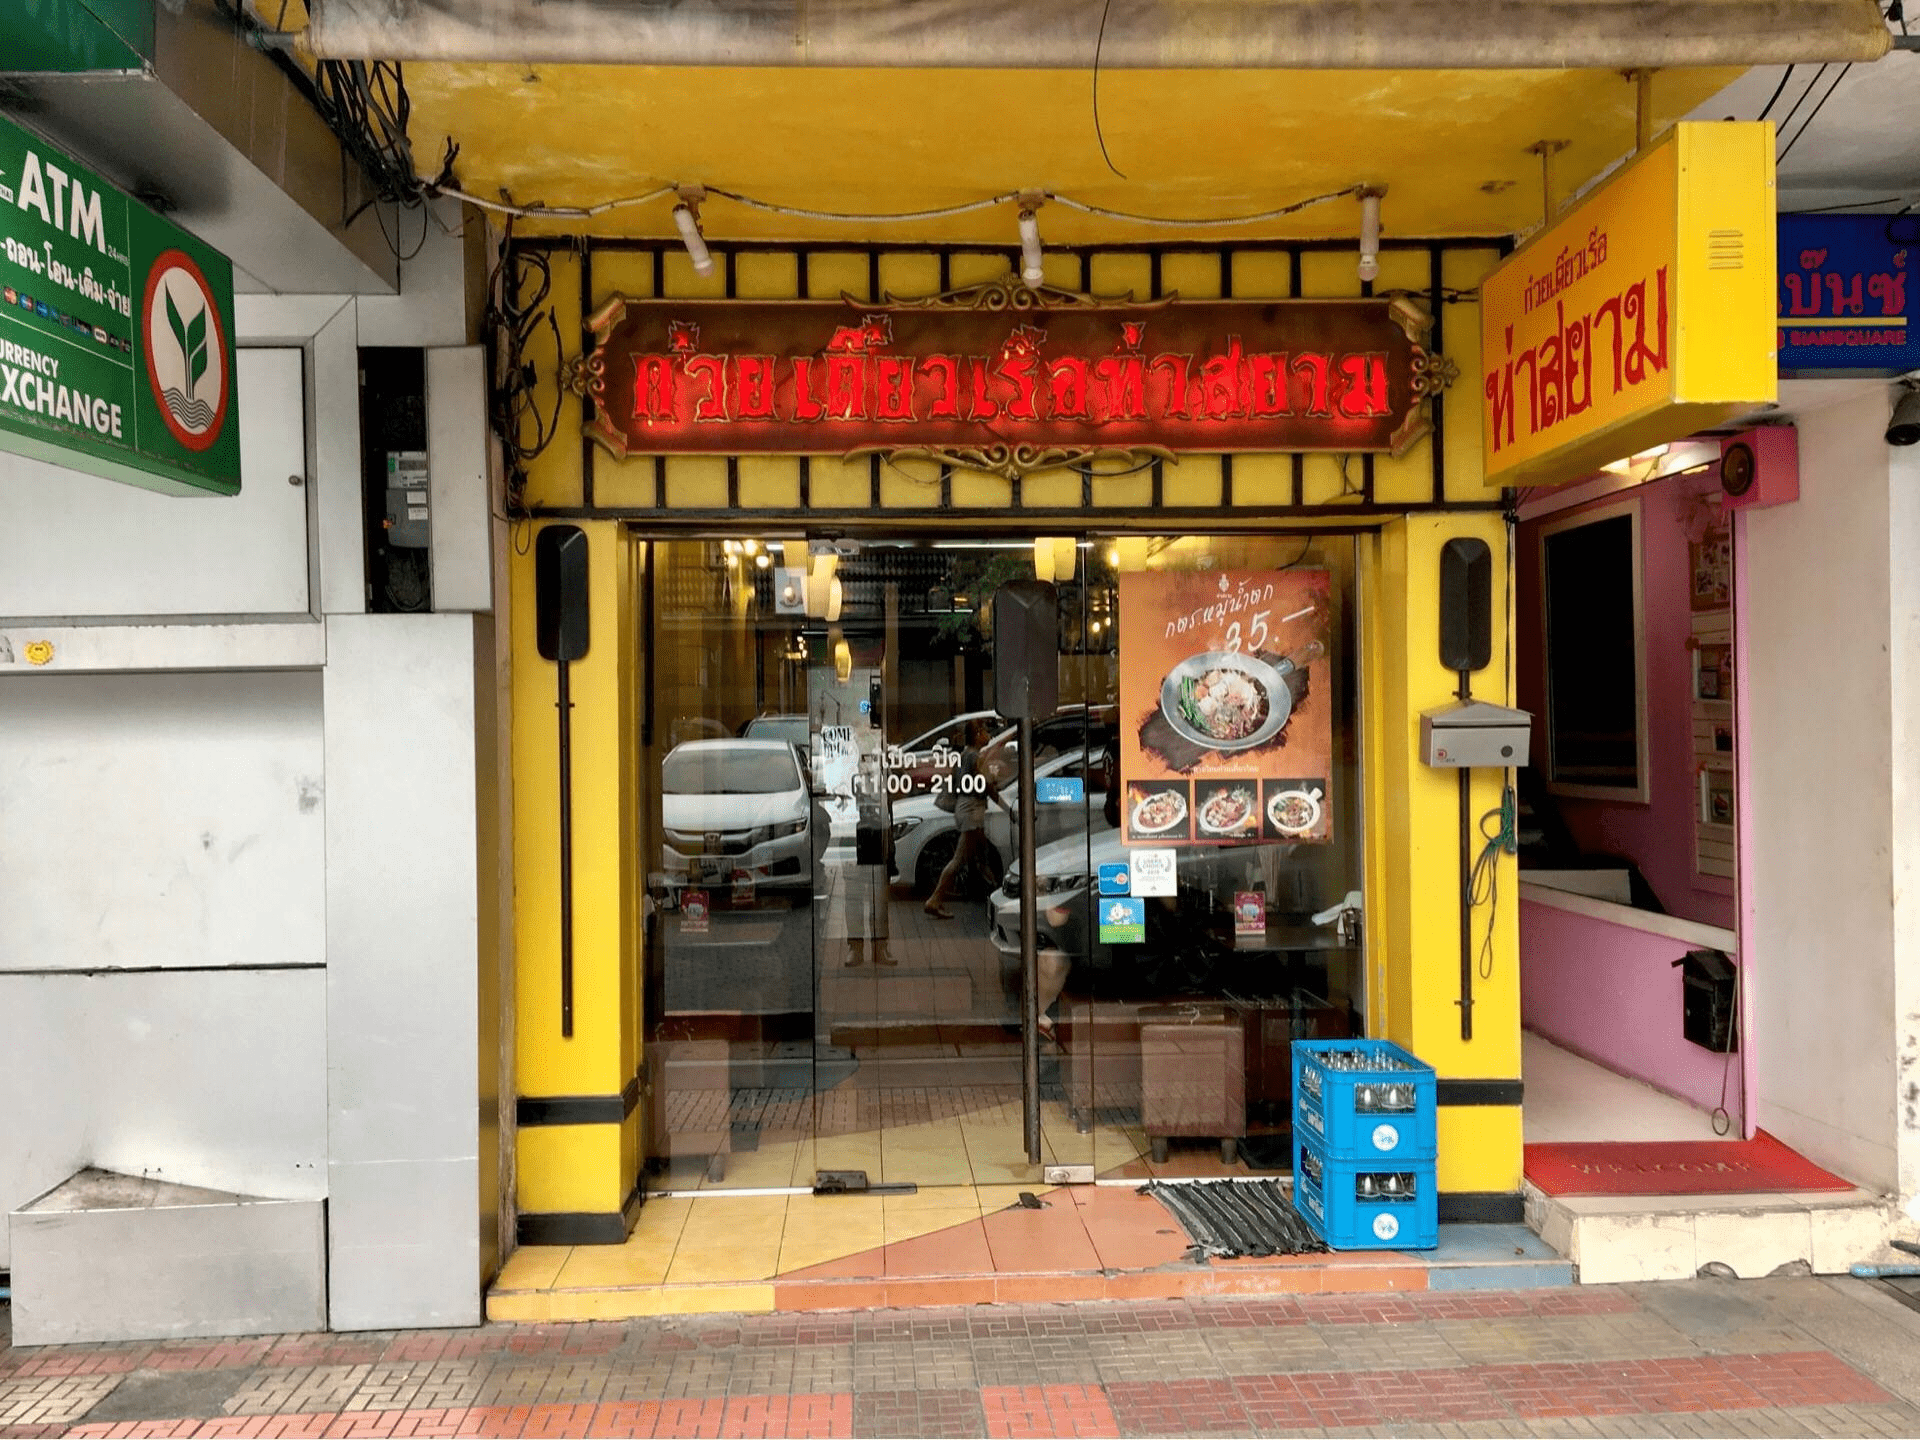 Tha Siam store